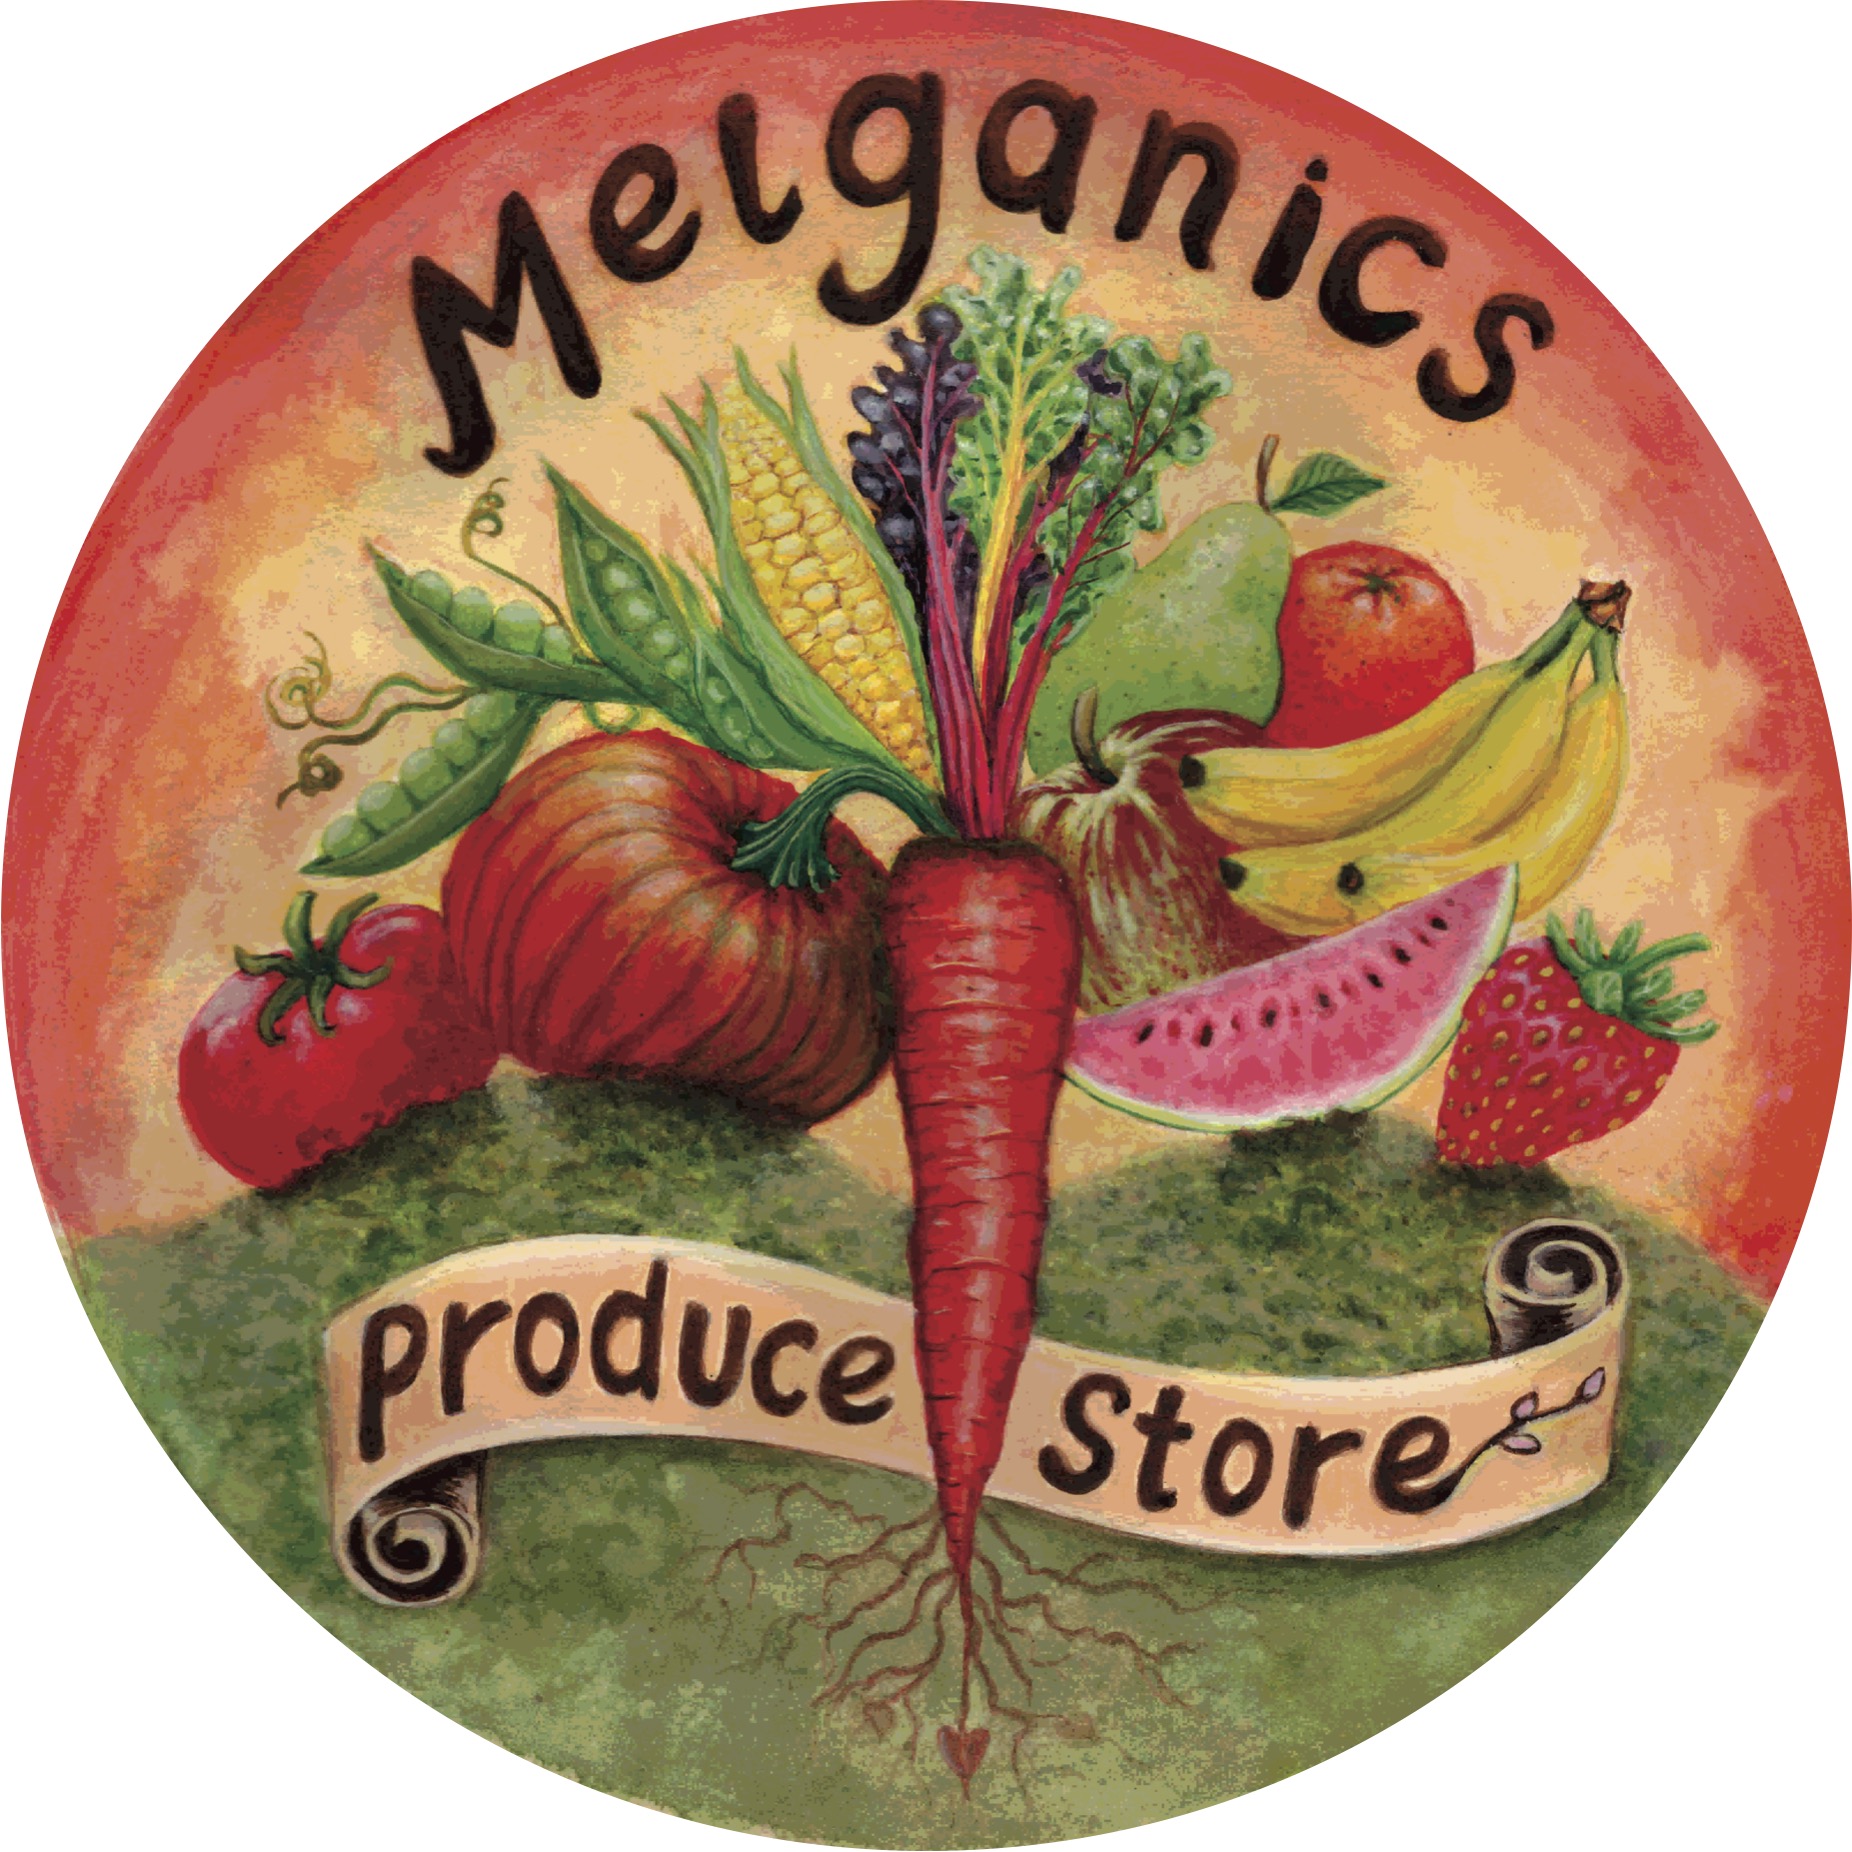 Melganics Produce Store Logo